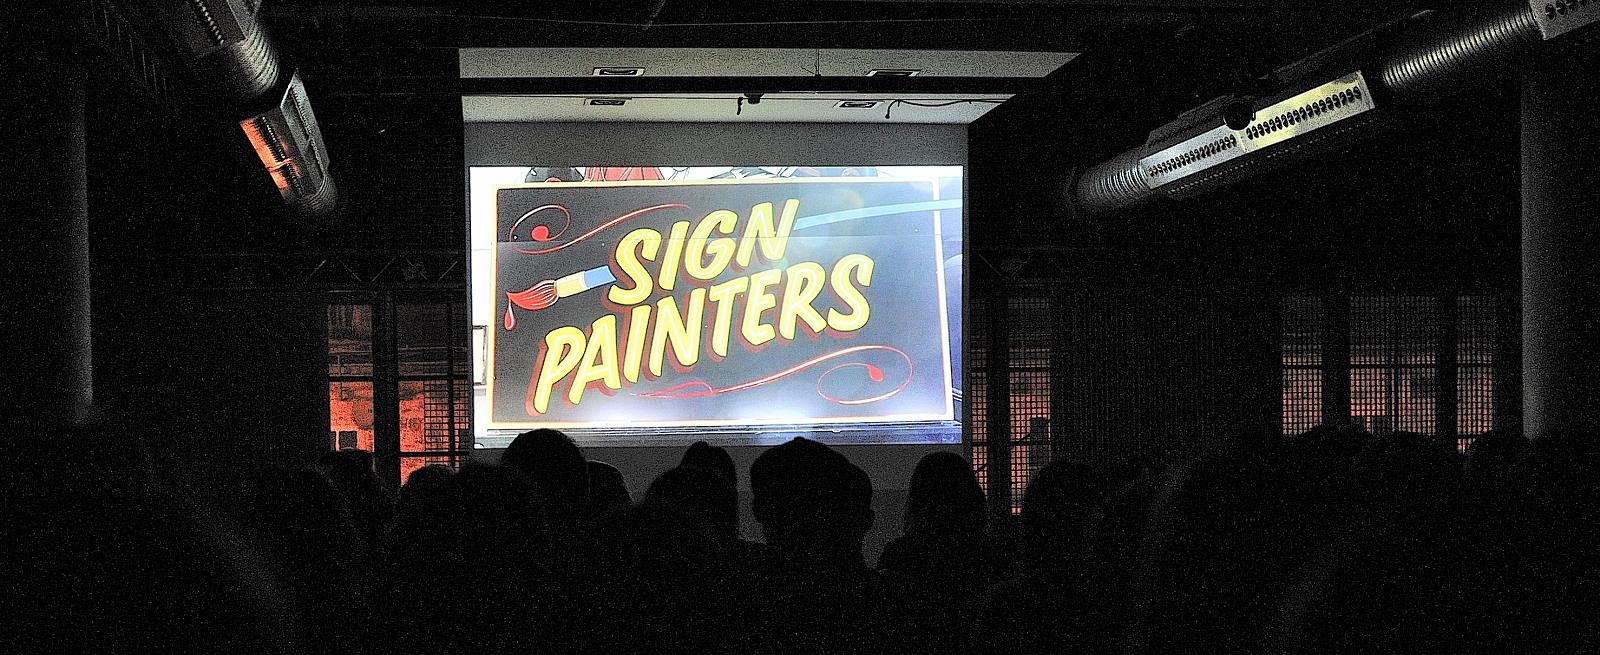 Sign Painters Filmpremiere Warenhaus Dom Towarowy Bracia Jablkowscy in Warschau Bracka Straße | Sign Painters - Workshop und Filmpremiere | Backstage